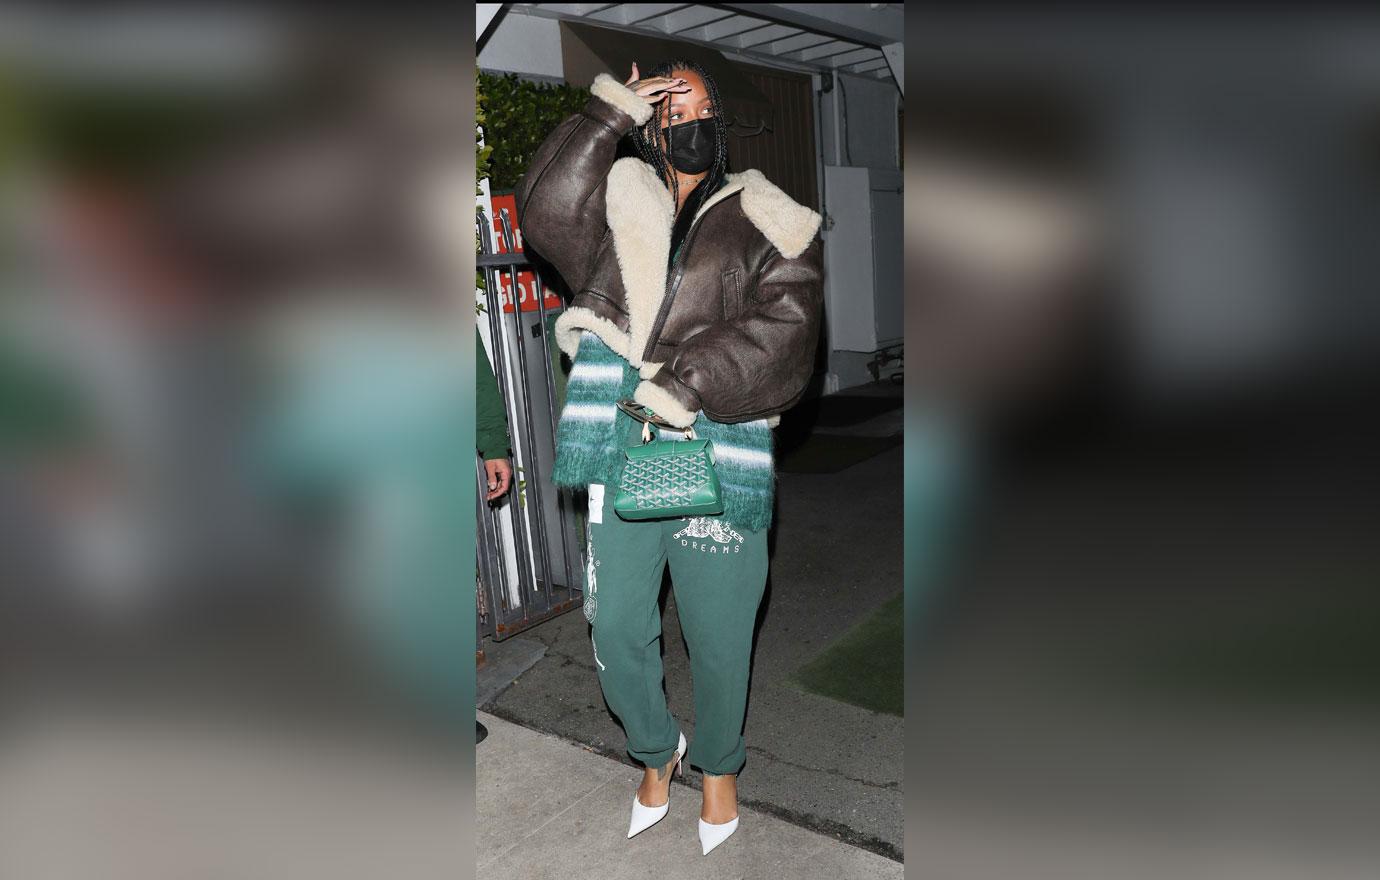 Rihanna's Nice Guy Los Angeles Vetements Bomber Jacket, Joyrich